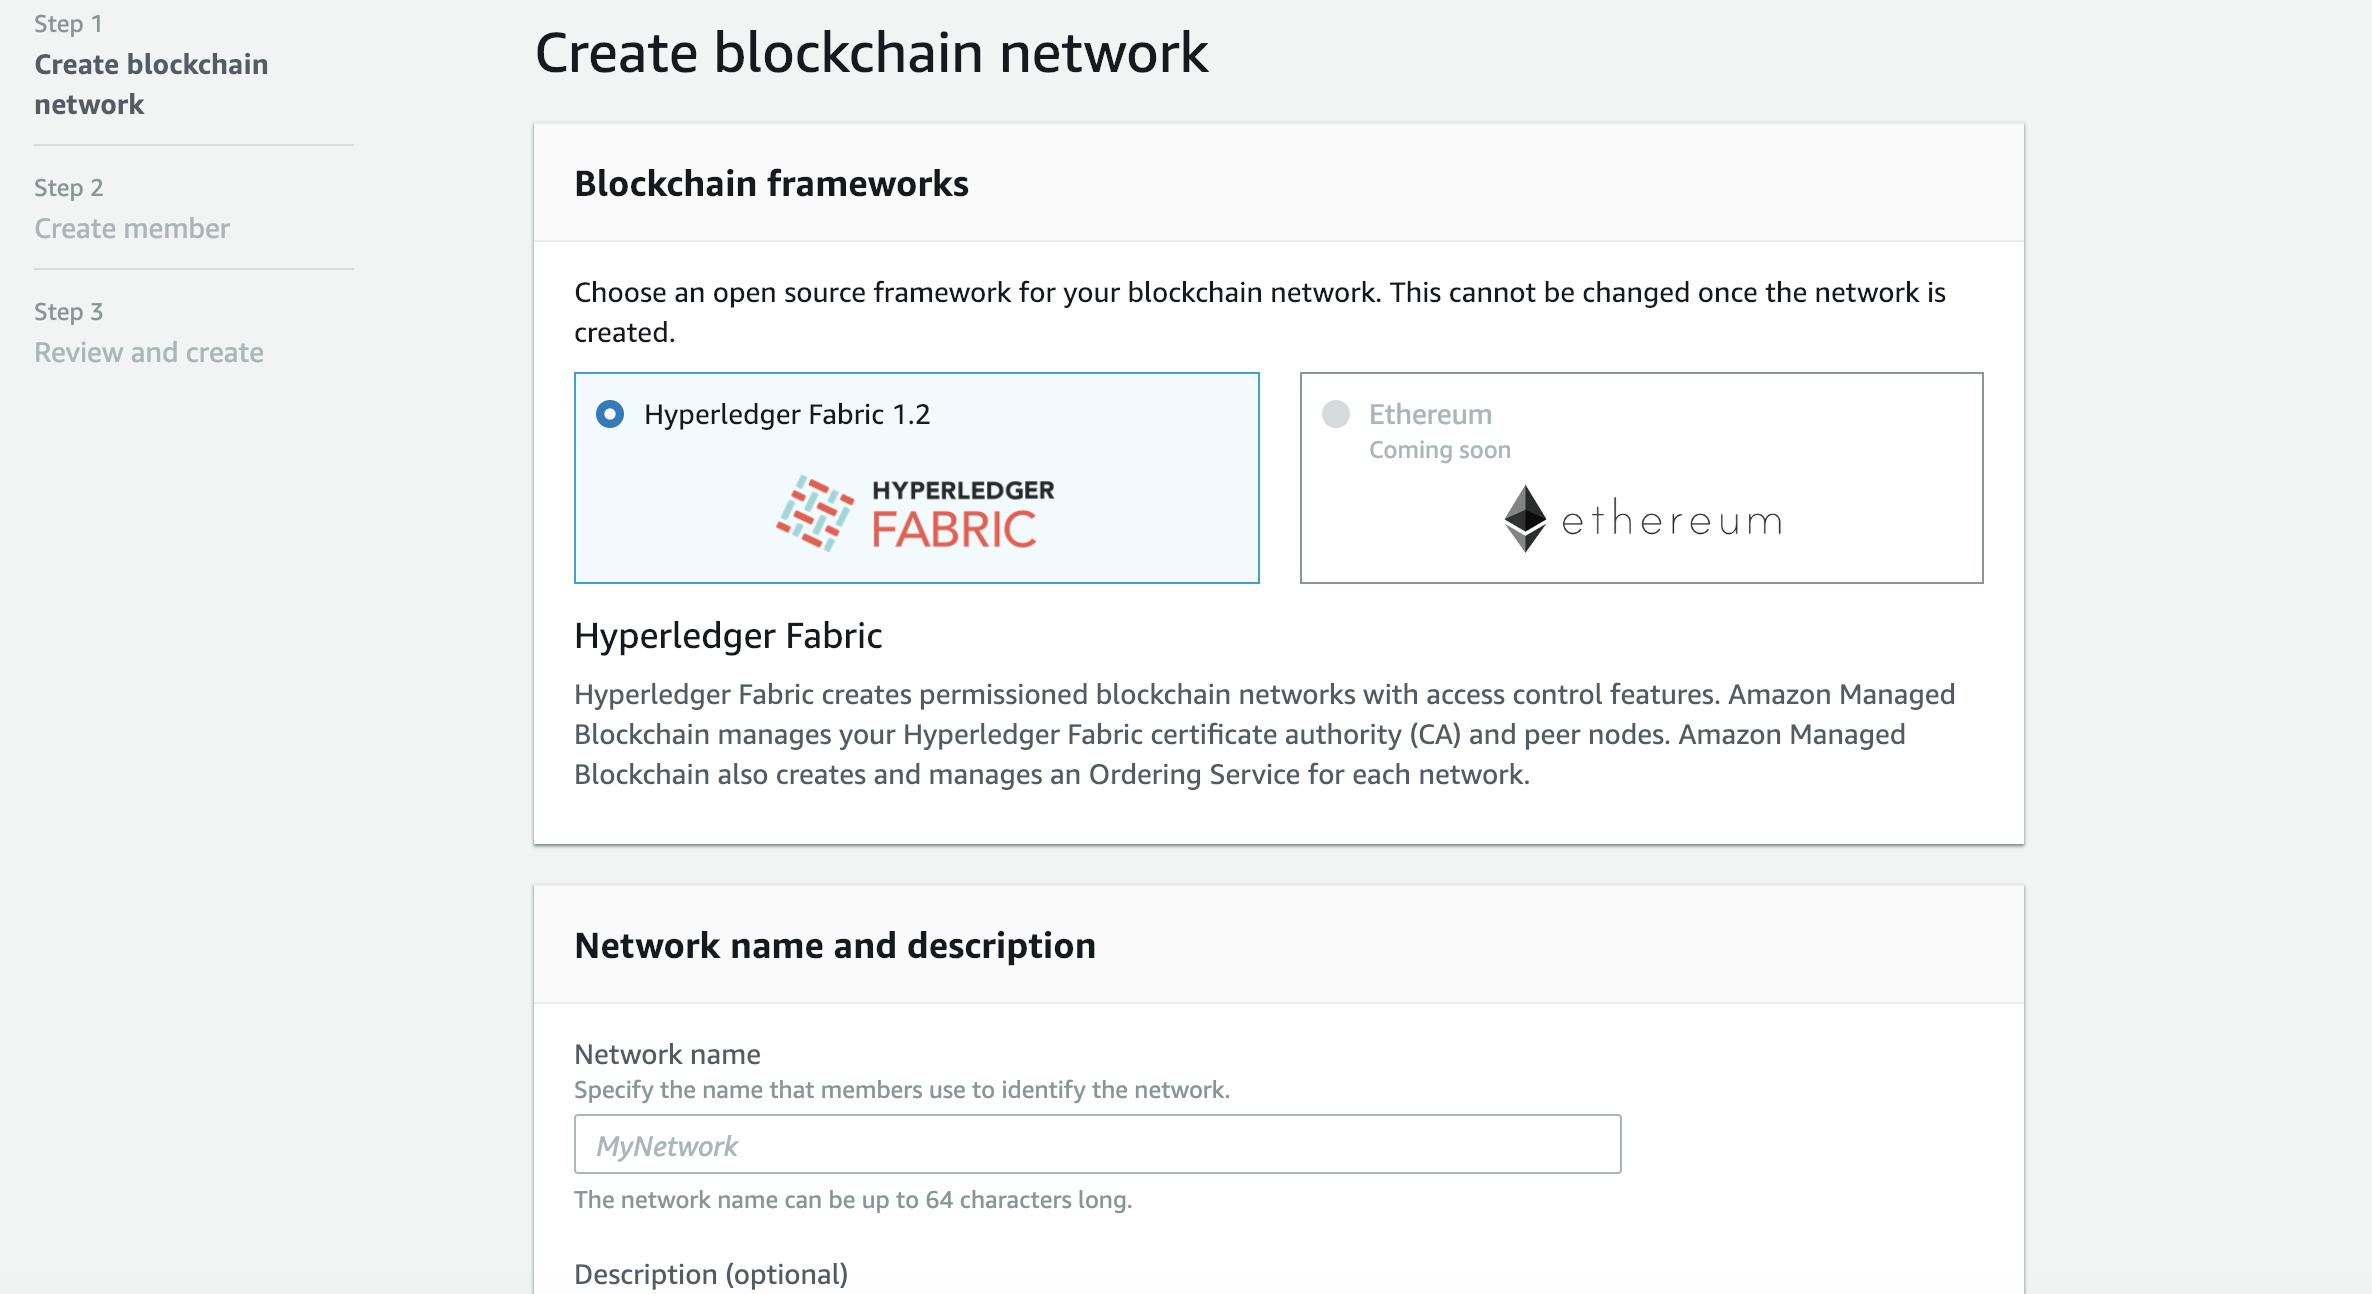 Create blockchain network001<br>
